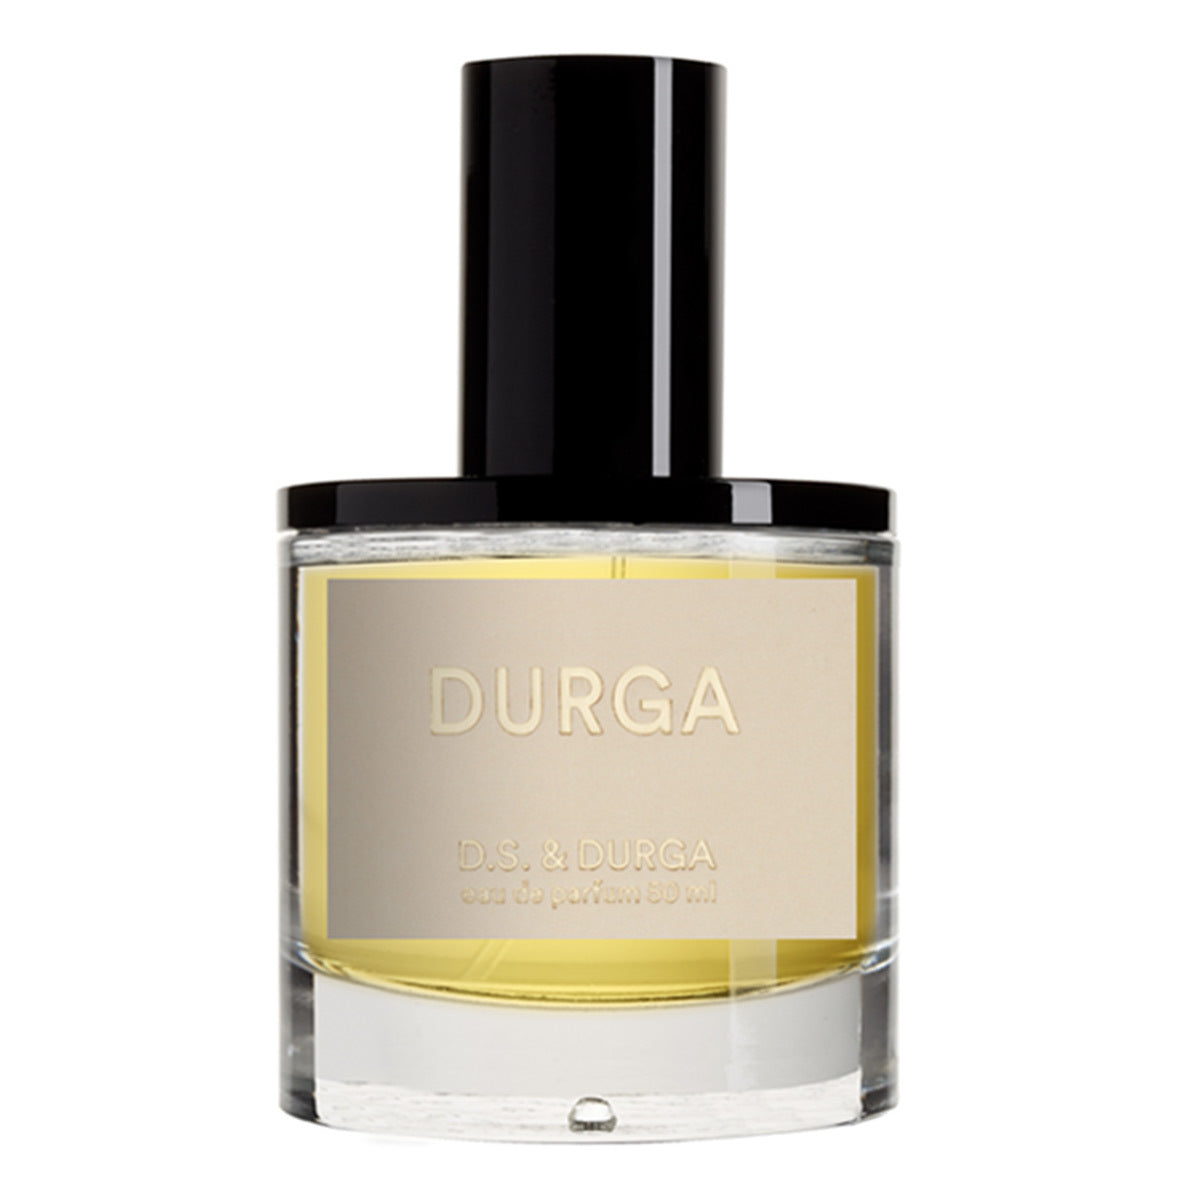 Primary image of Durga Eau de Parfum